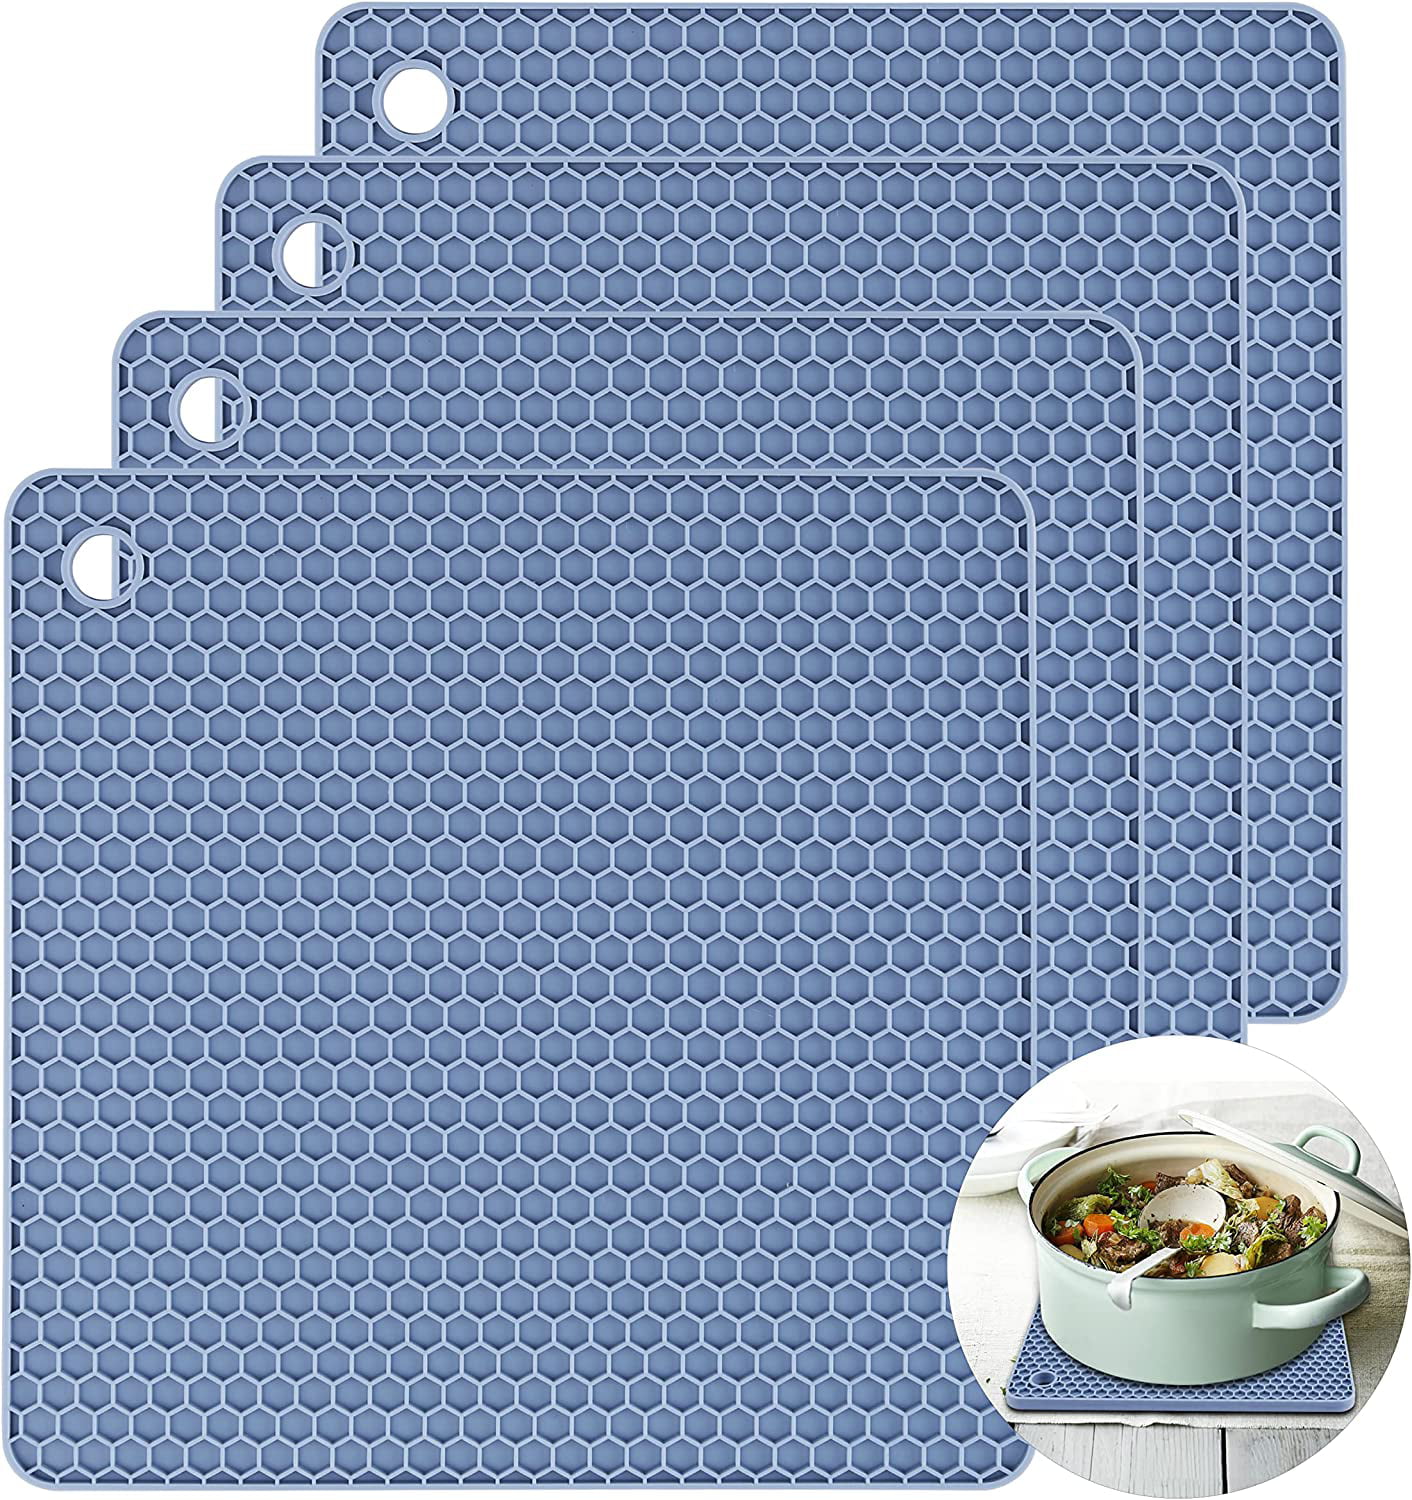 2 Pcs Large Silicone Trivet Mat For Hot Dishes/heat Resistant Pot